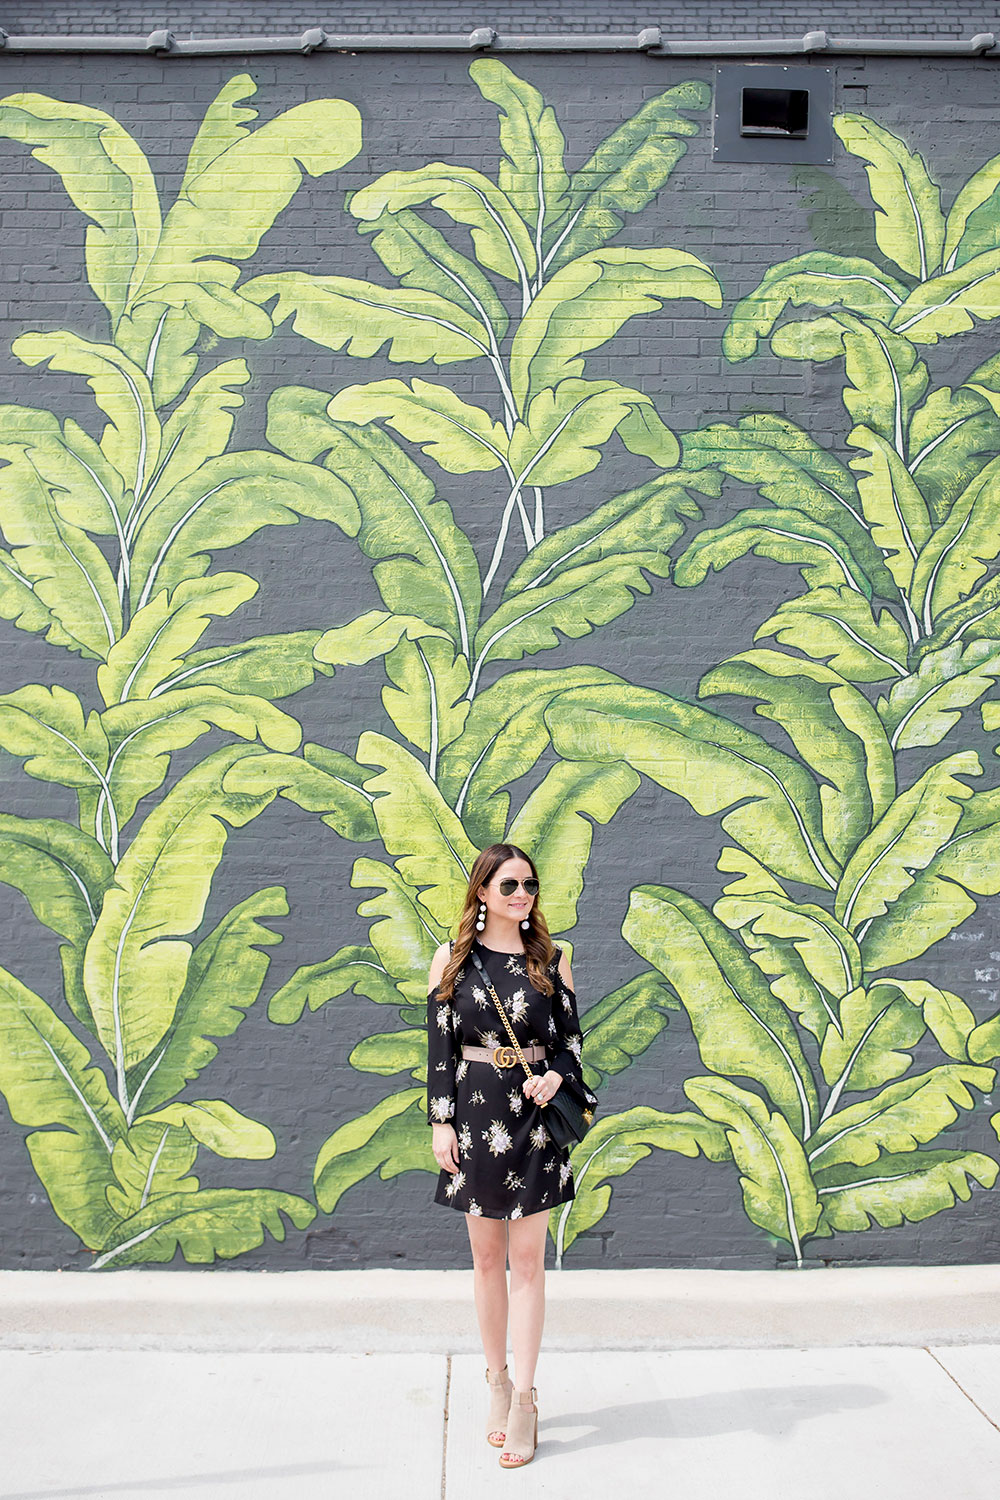 Palm Leaf Mural Chicago